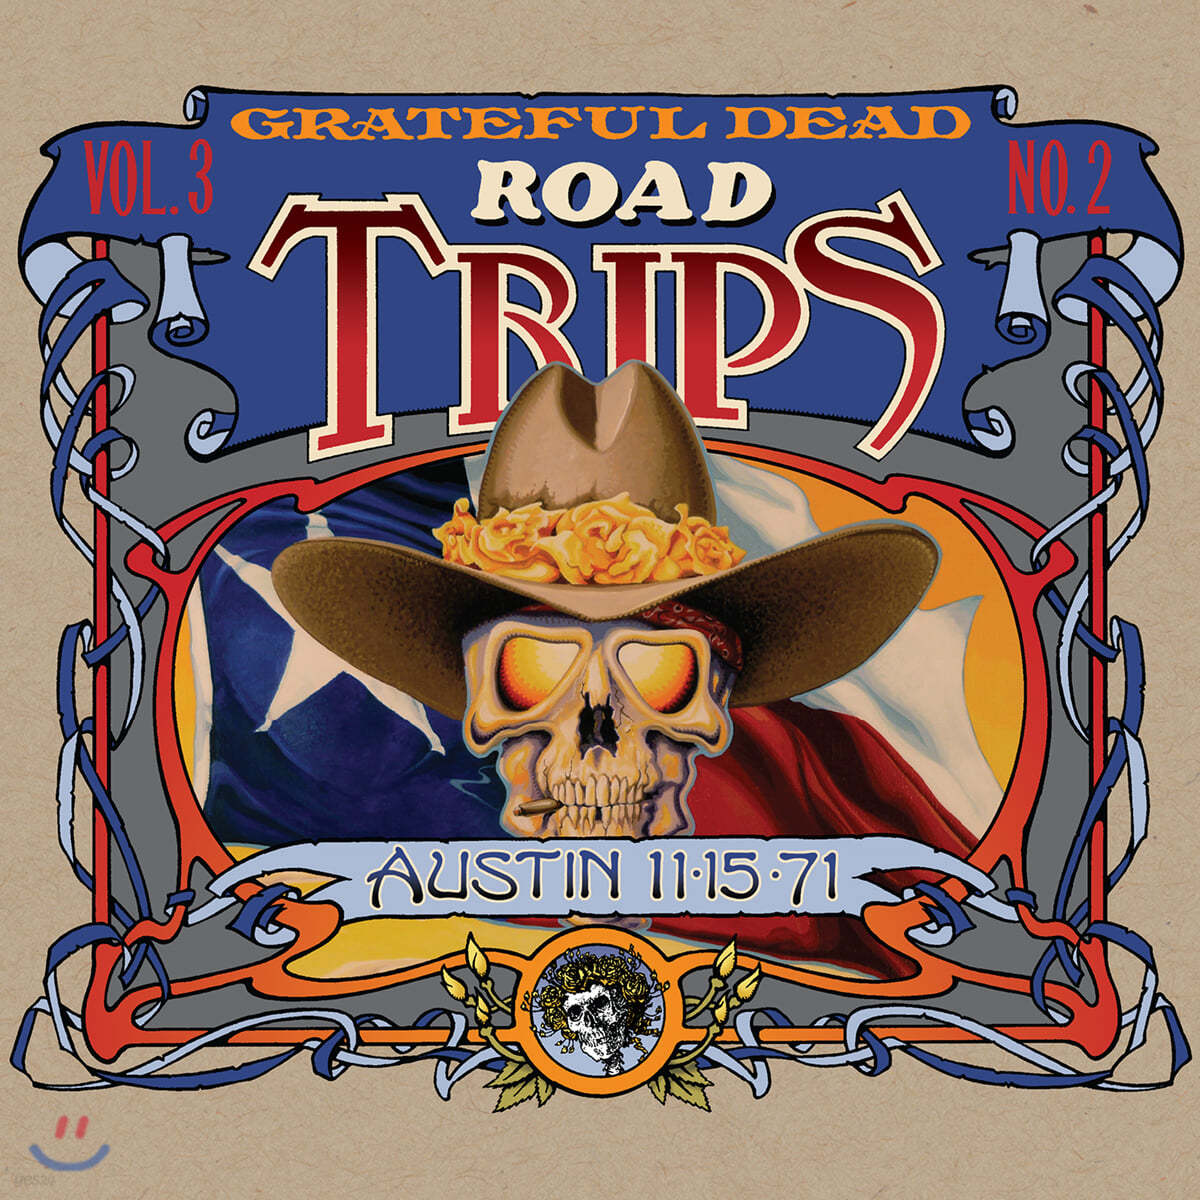 Grateful Dead (그레이트풀 데드) - Road Trips Vol. 3 No. 2 - Austin 11-15-71